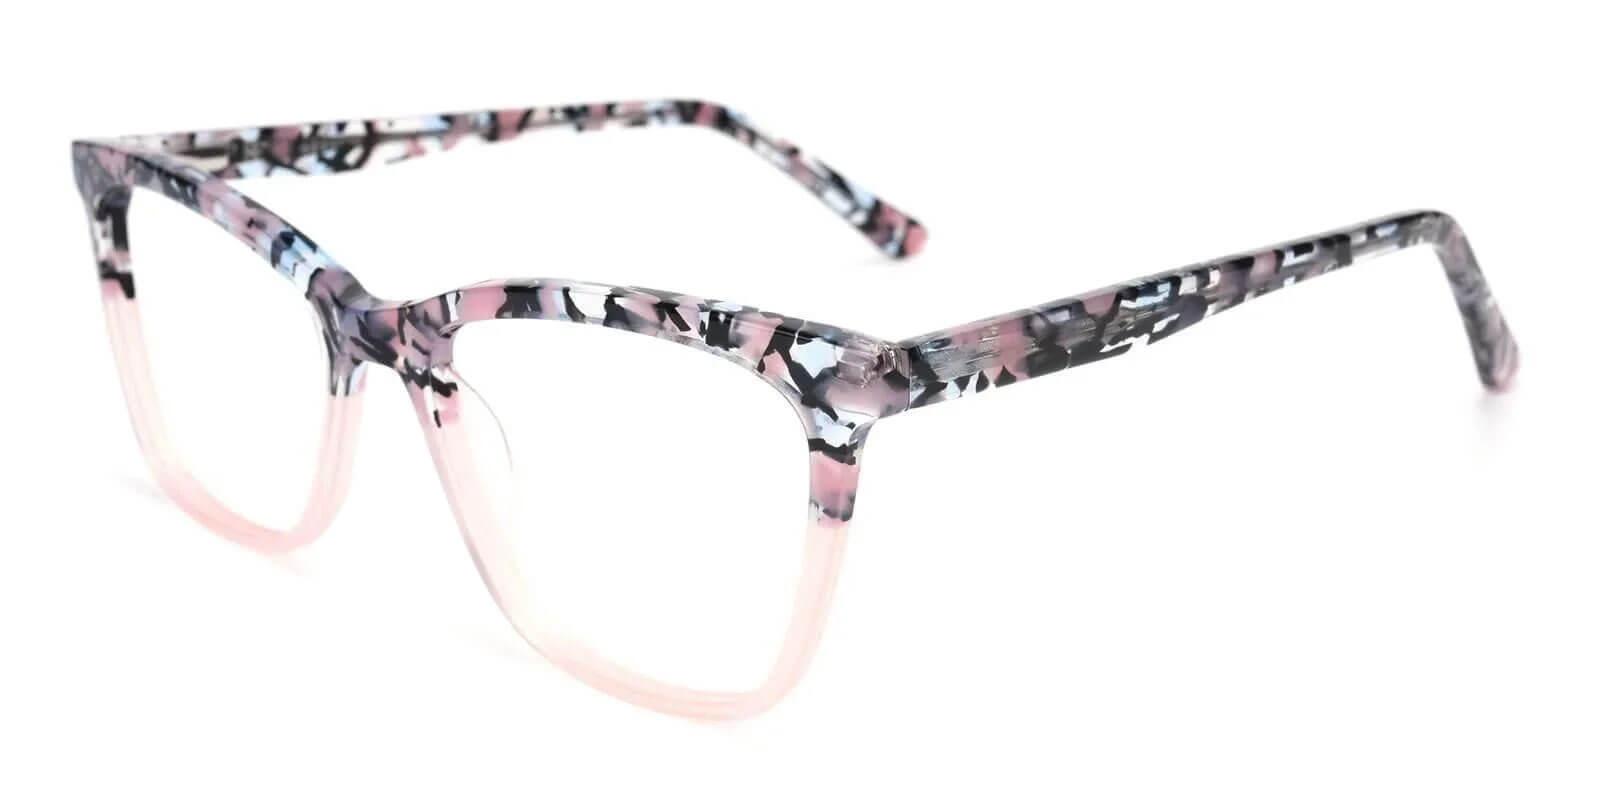 Masser Pink Acetate Eyeglasses , UniversalBridgeFit Frames from ABBE Glasses